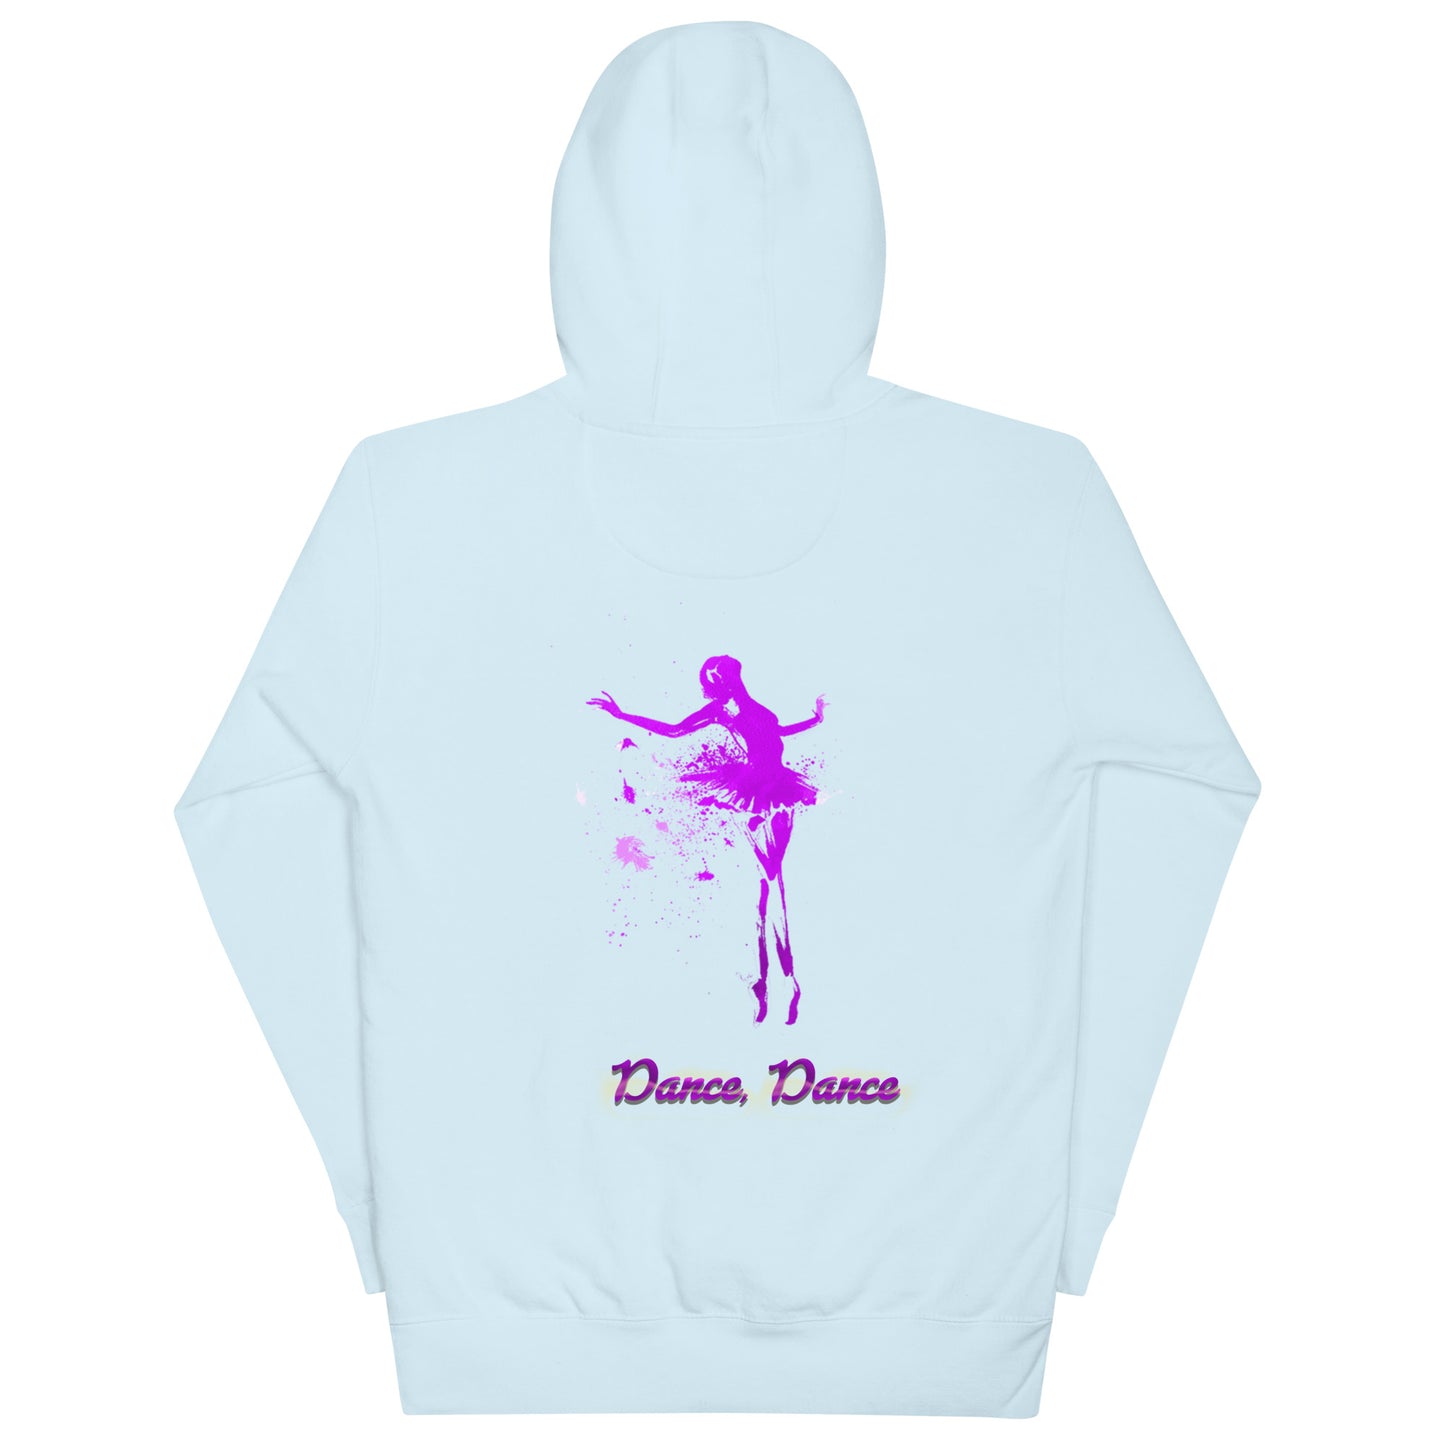 Snooty Fox Art Unisex Hoodie - Dance Dance